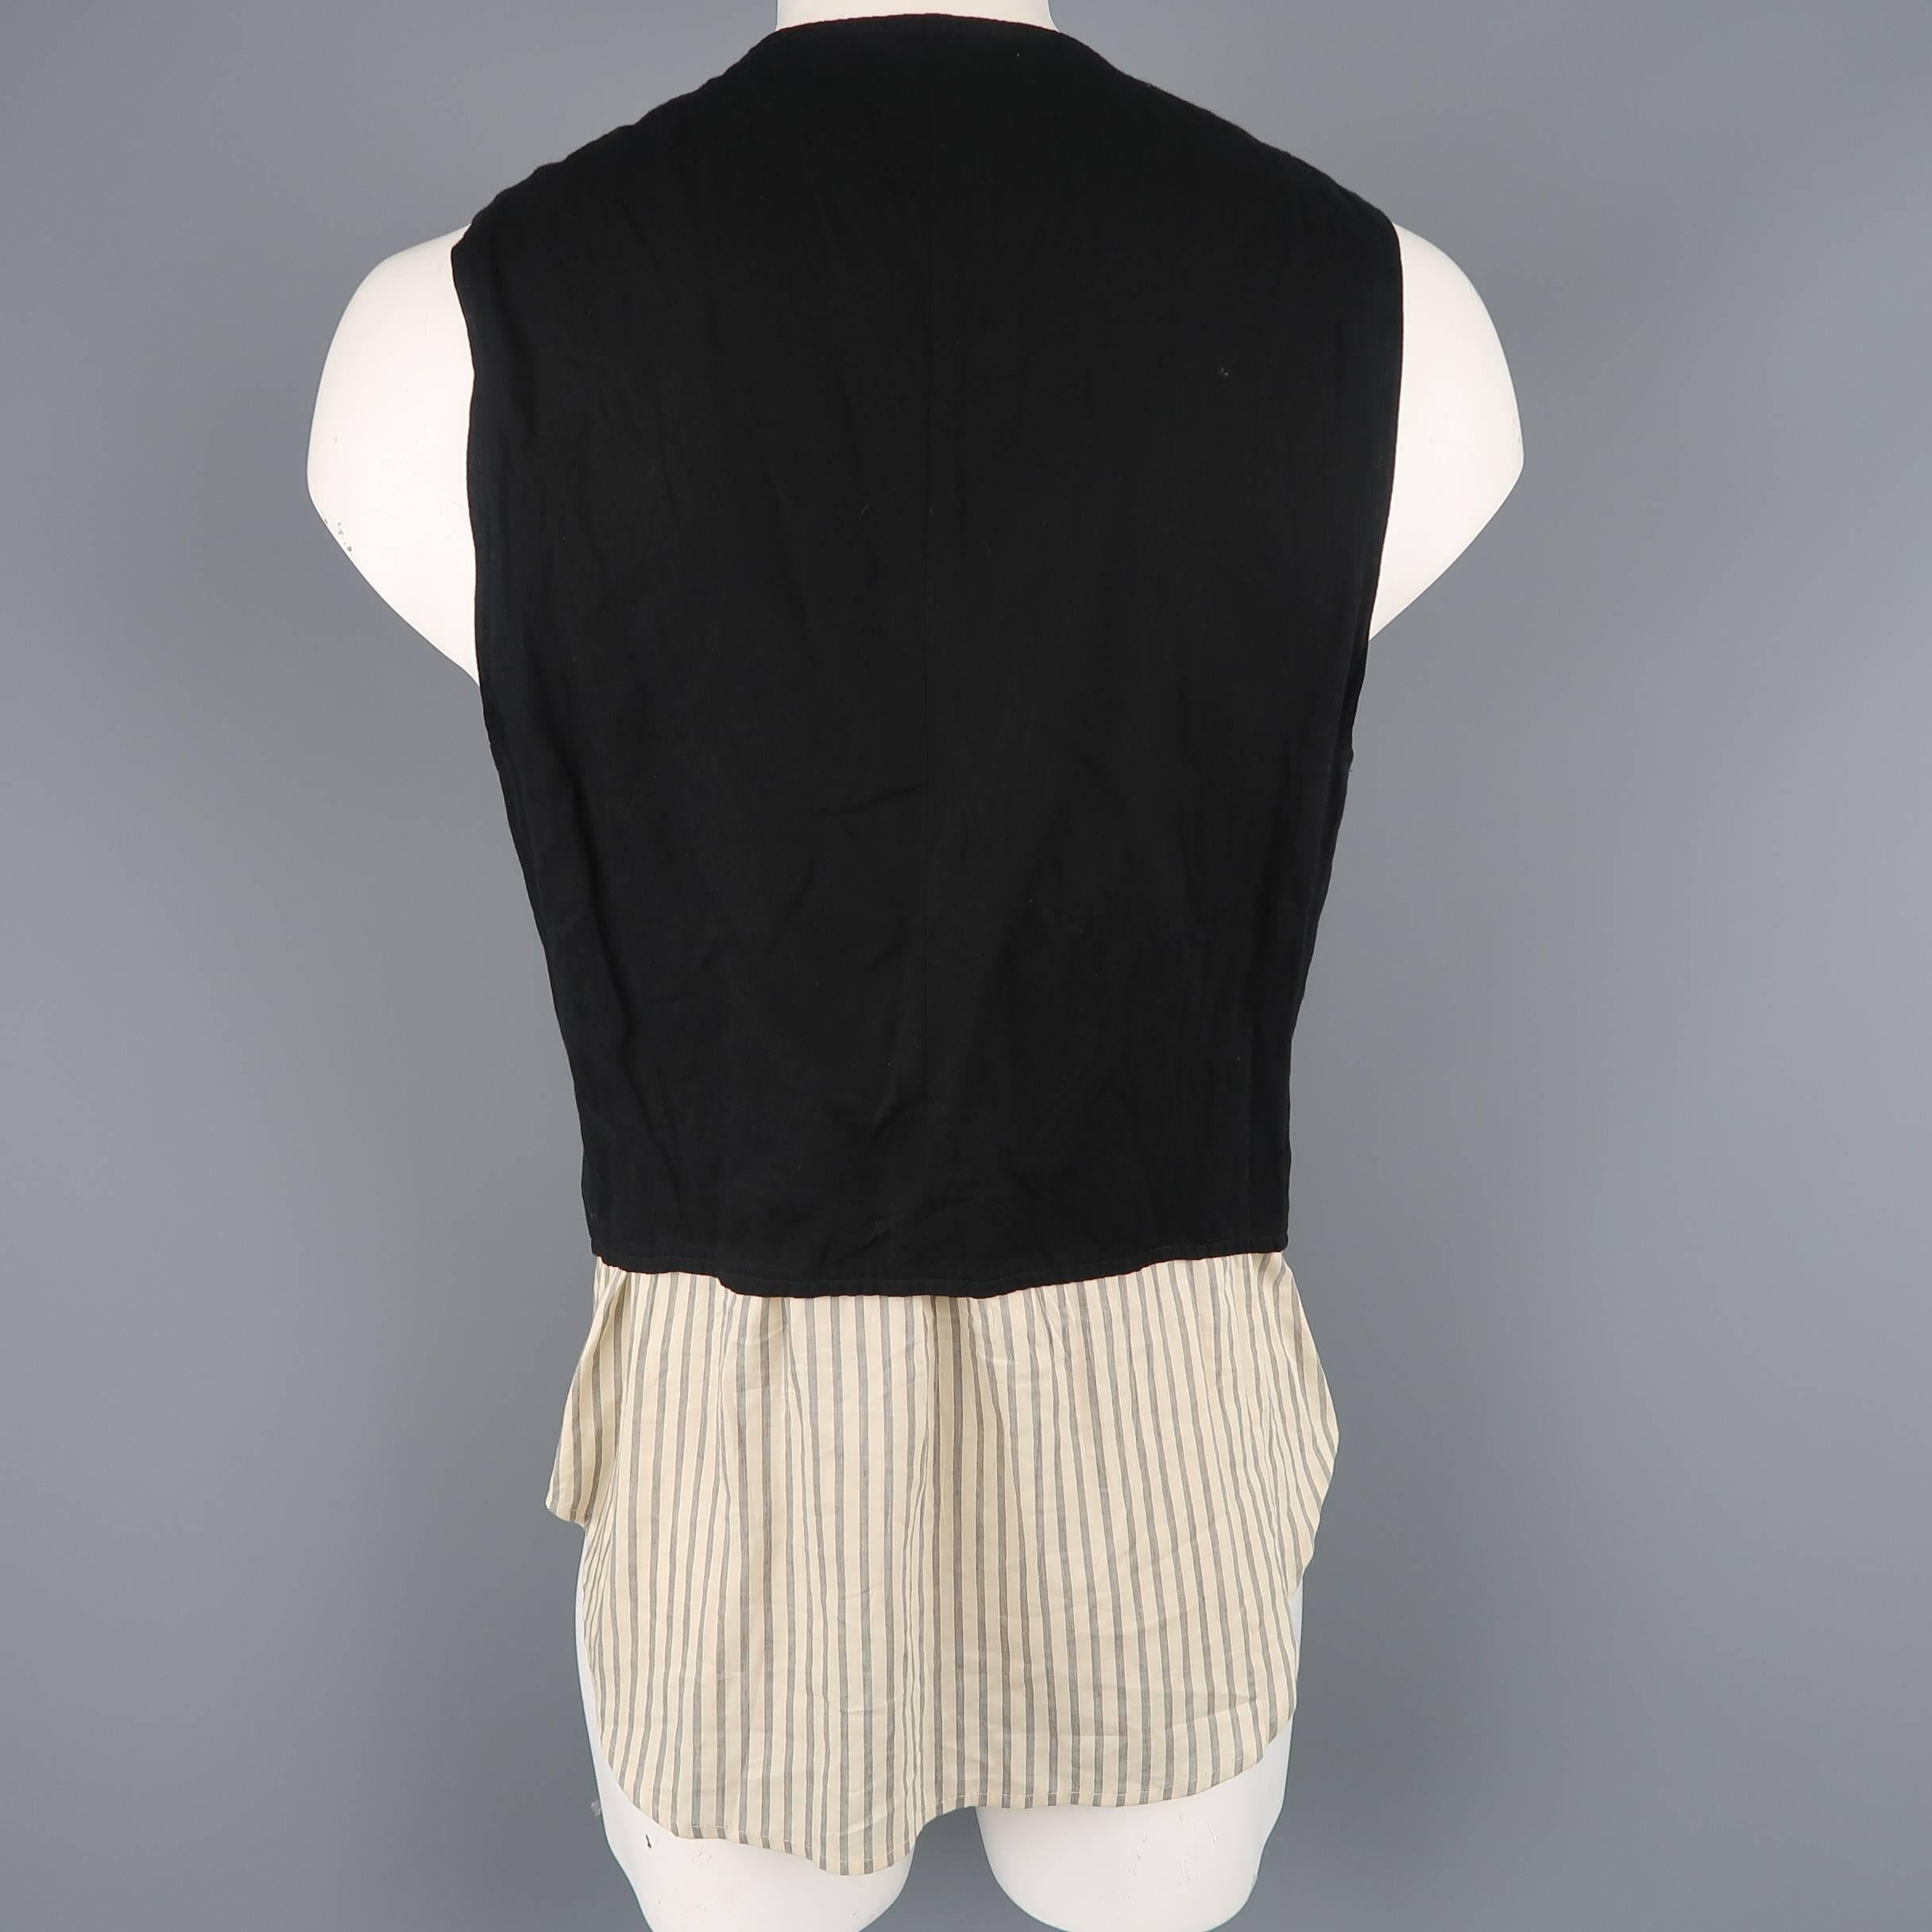 Ann Demeulemeester Men's Black and Beige Striped Shirt Layered Vest 3